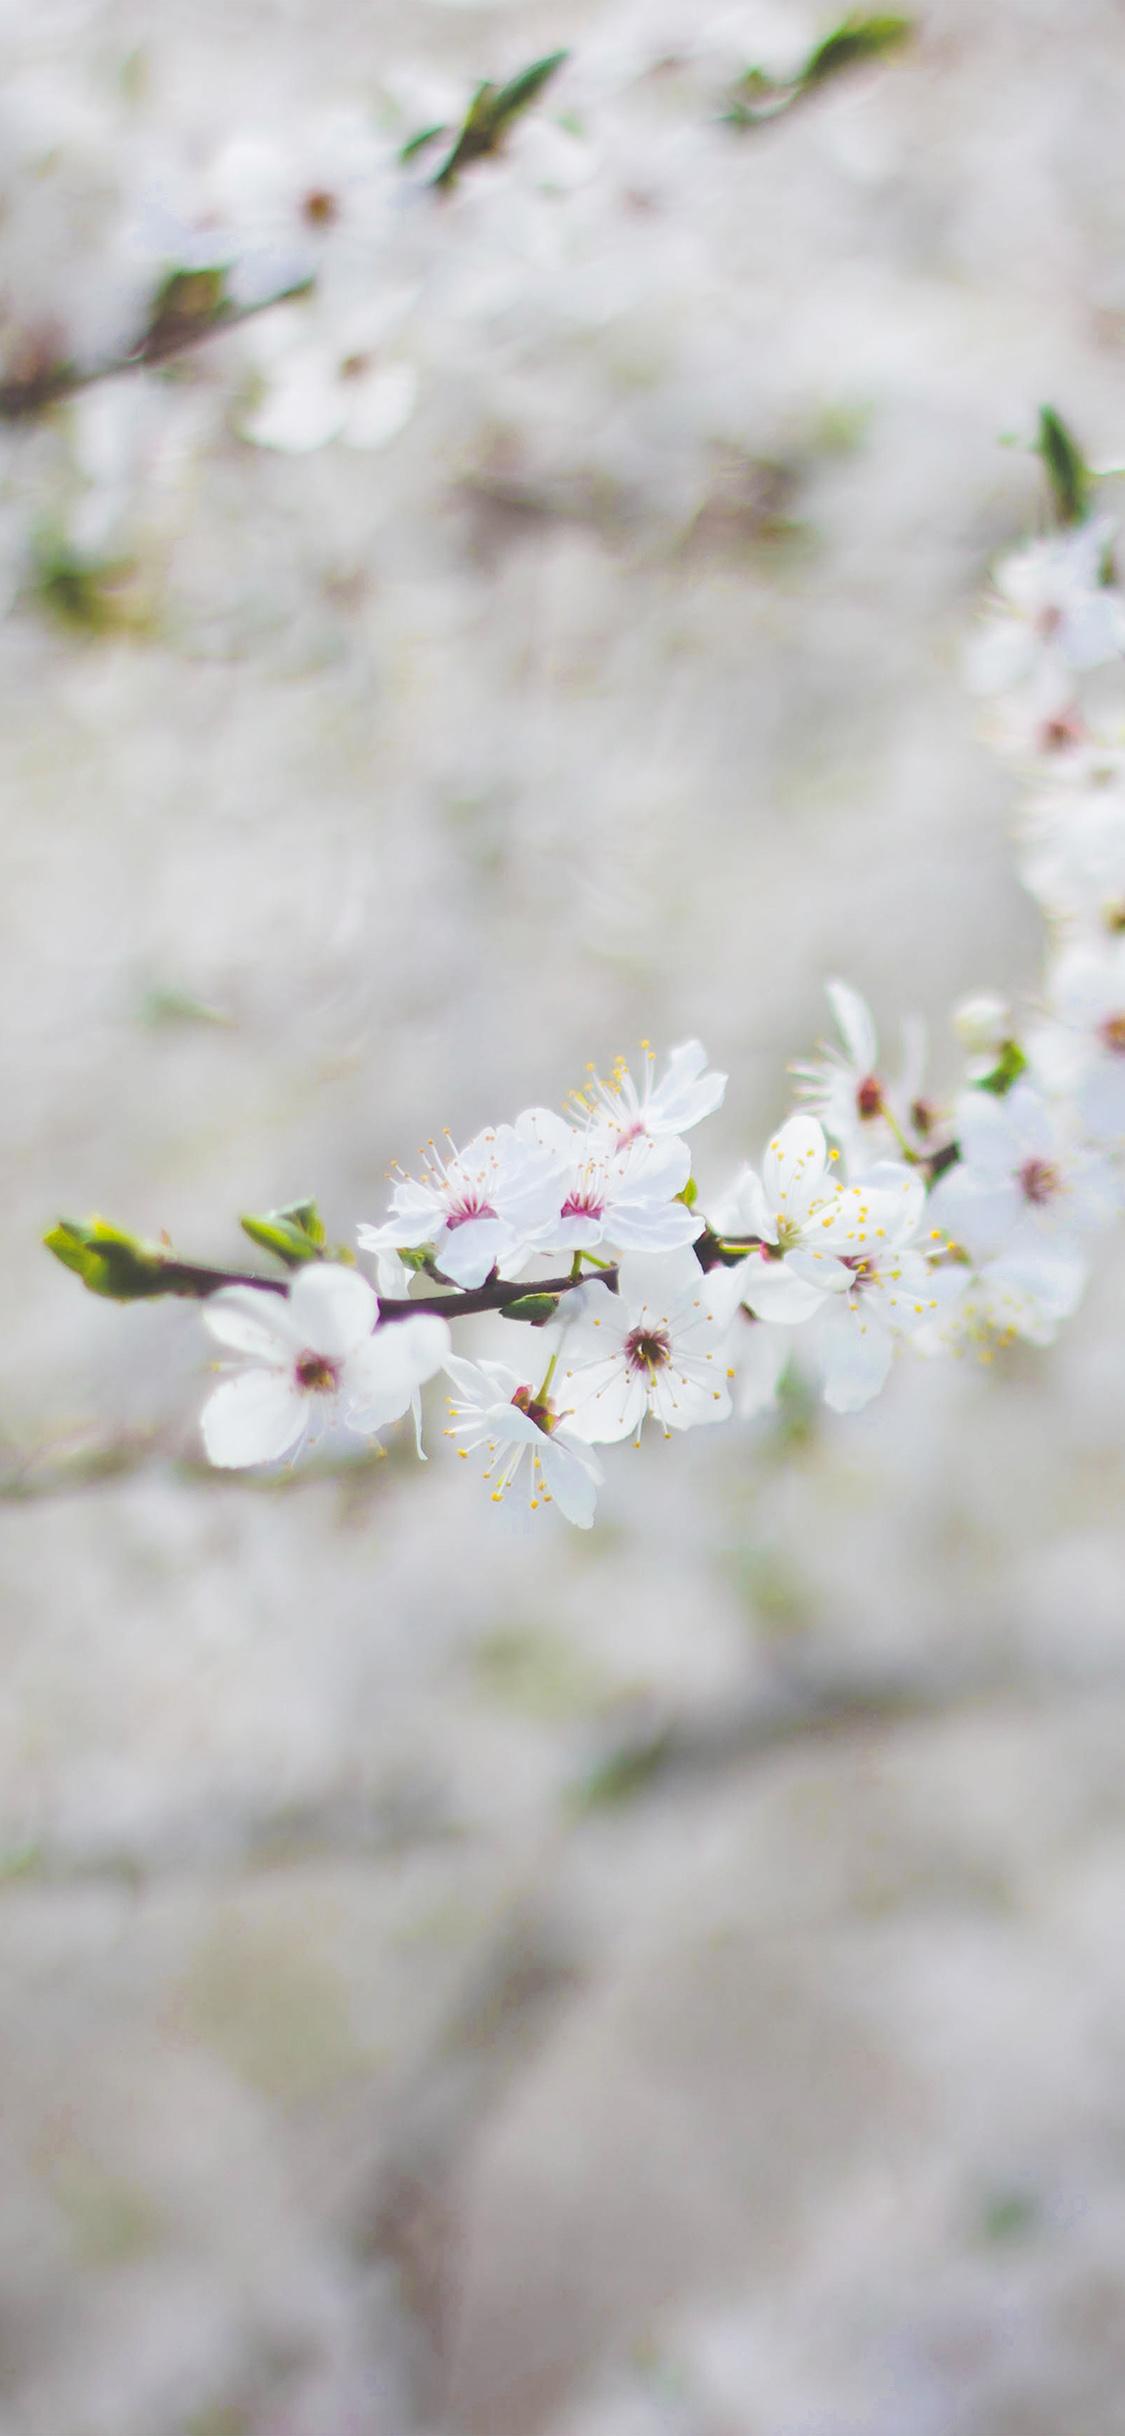 iPhone X wallpaper. spring flower cherry